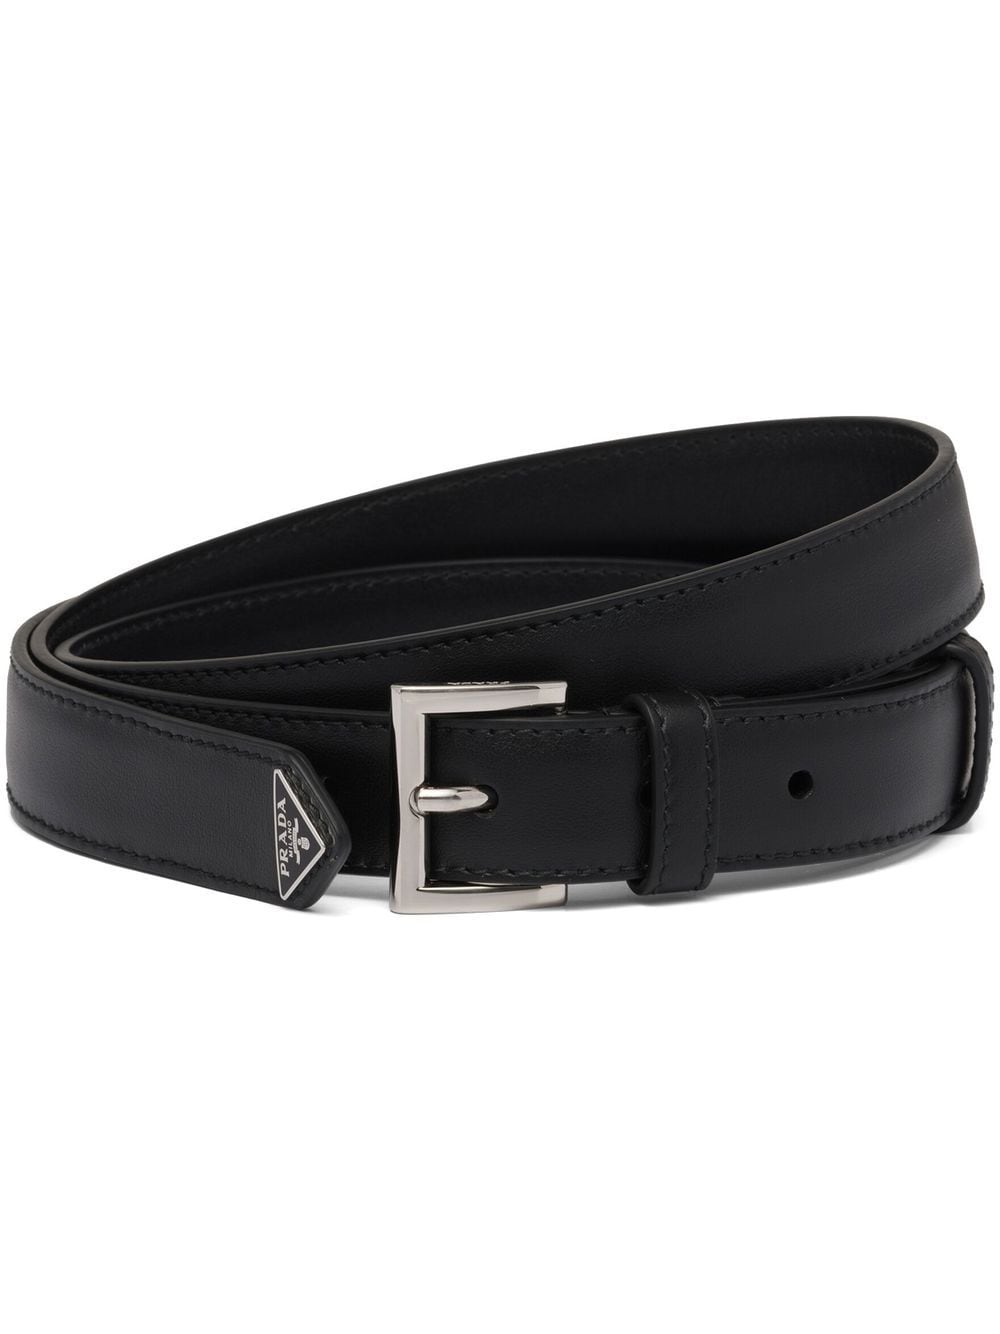 PRADA buckle-fastened leather belt-1